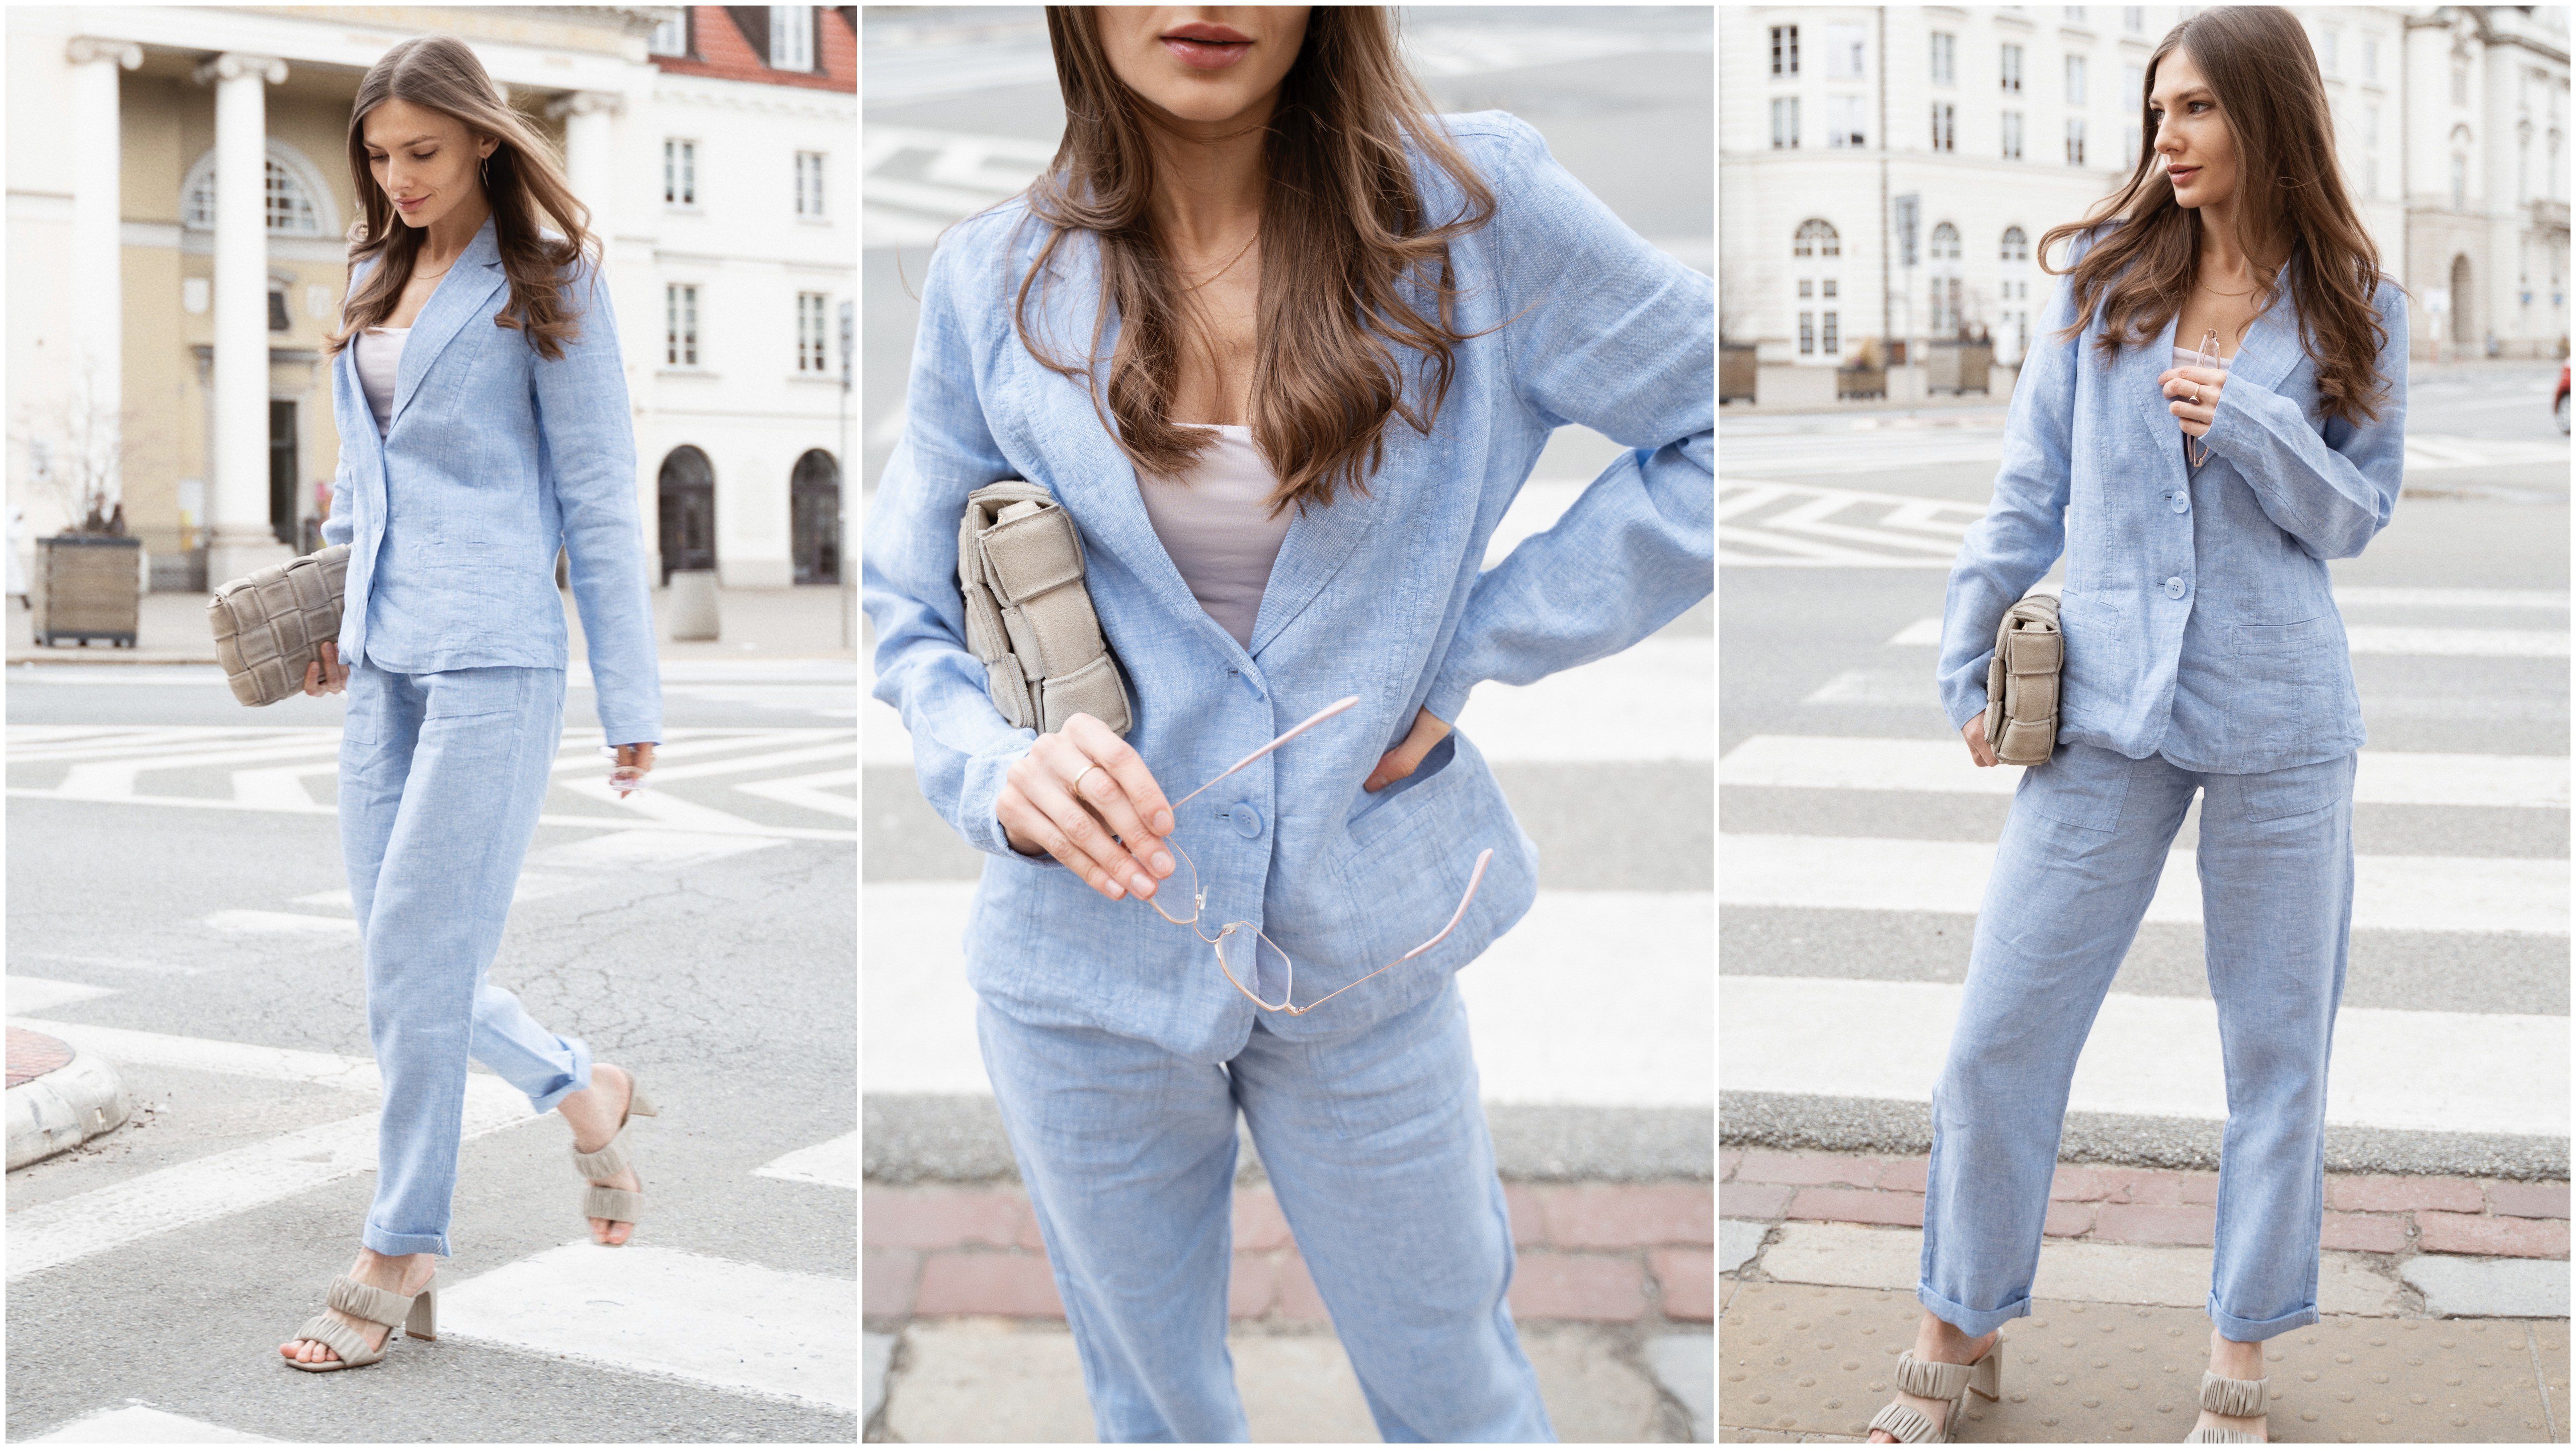 Influencer Monika loves the light blue linen suit from Olsen's Dolce Vita collection.